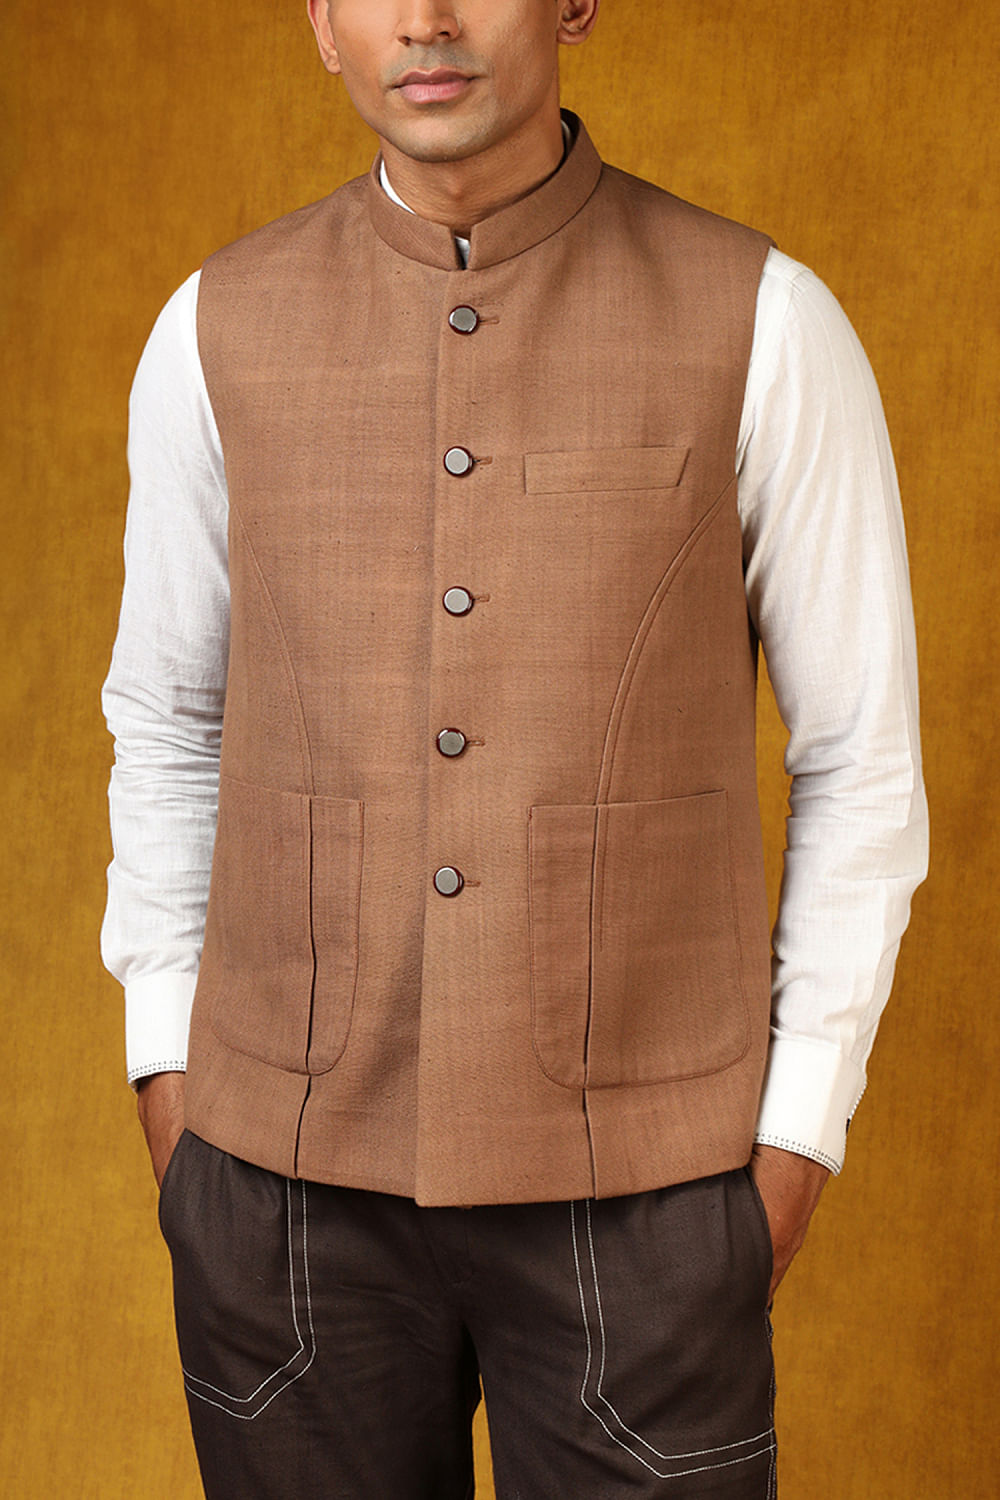 Buy Vastraa Fusion Men's Blended Bandhgala Festive Nehru Jacket/Waistcoat/ Vest - Khadi Fawn - Size-46 at Amazon.in